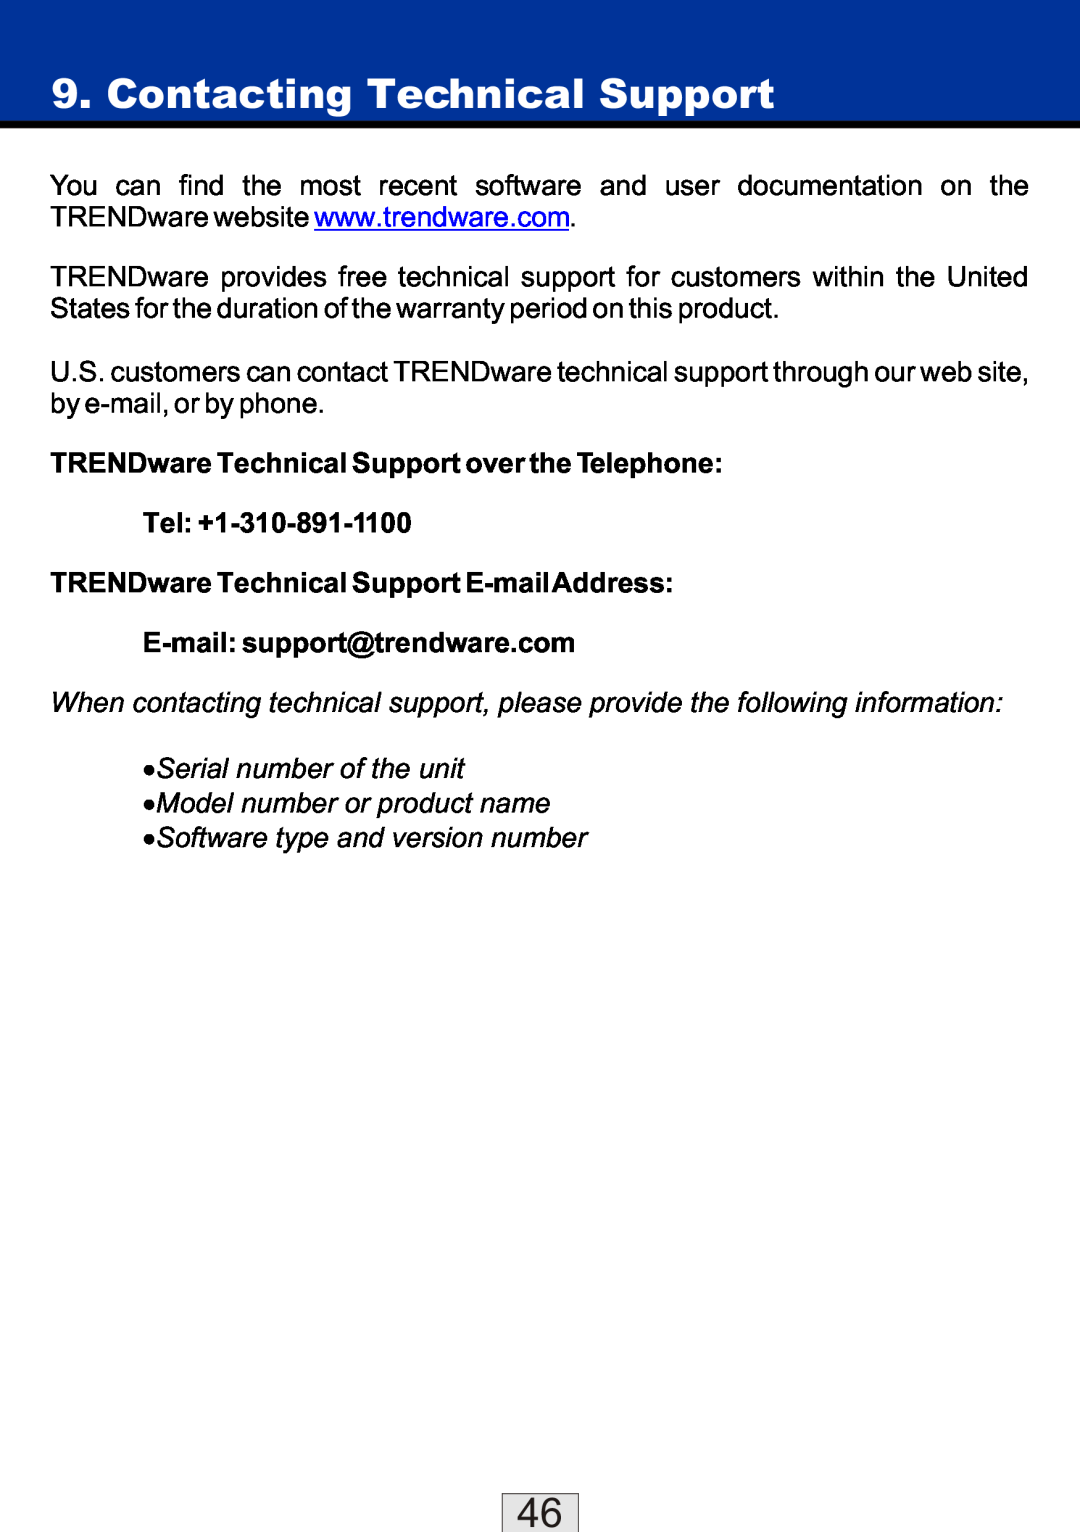 TRENDnet TEW-310APBX Contacting Technical Support, TRENDware Technical Support over the Telephone Tel +1-310-891-1100 